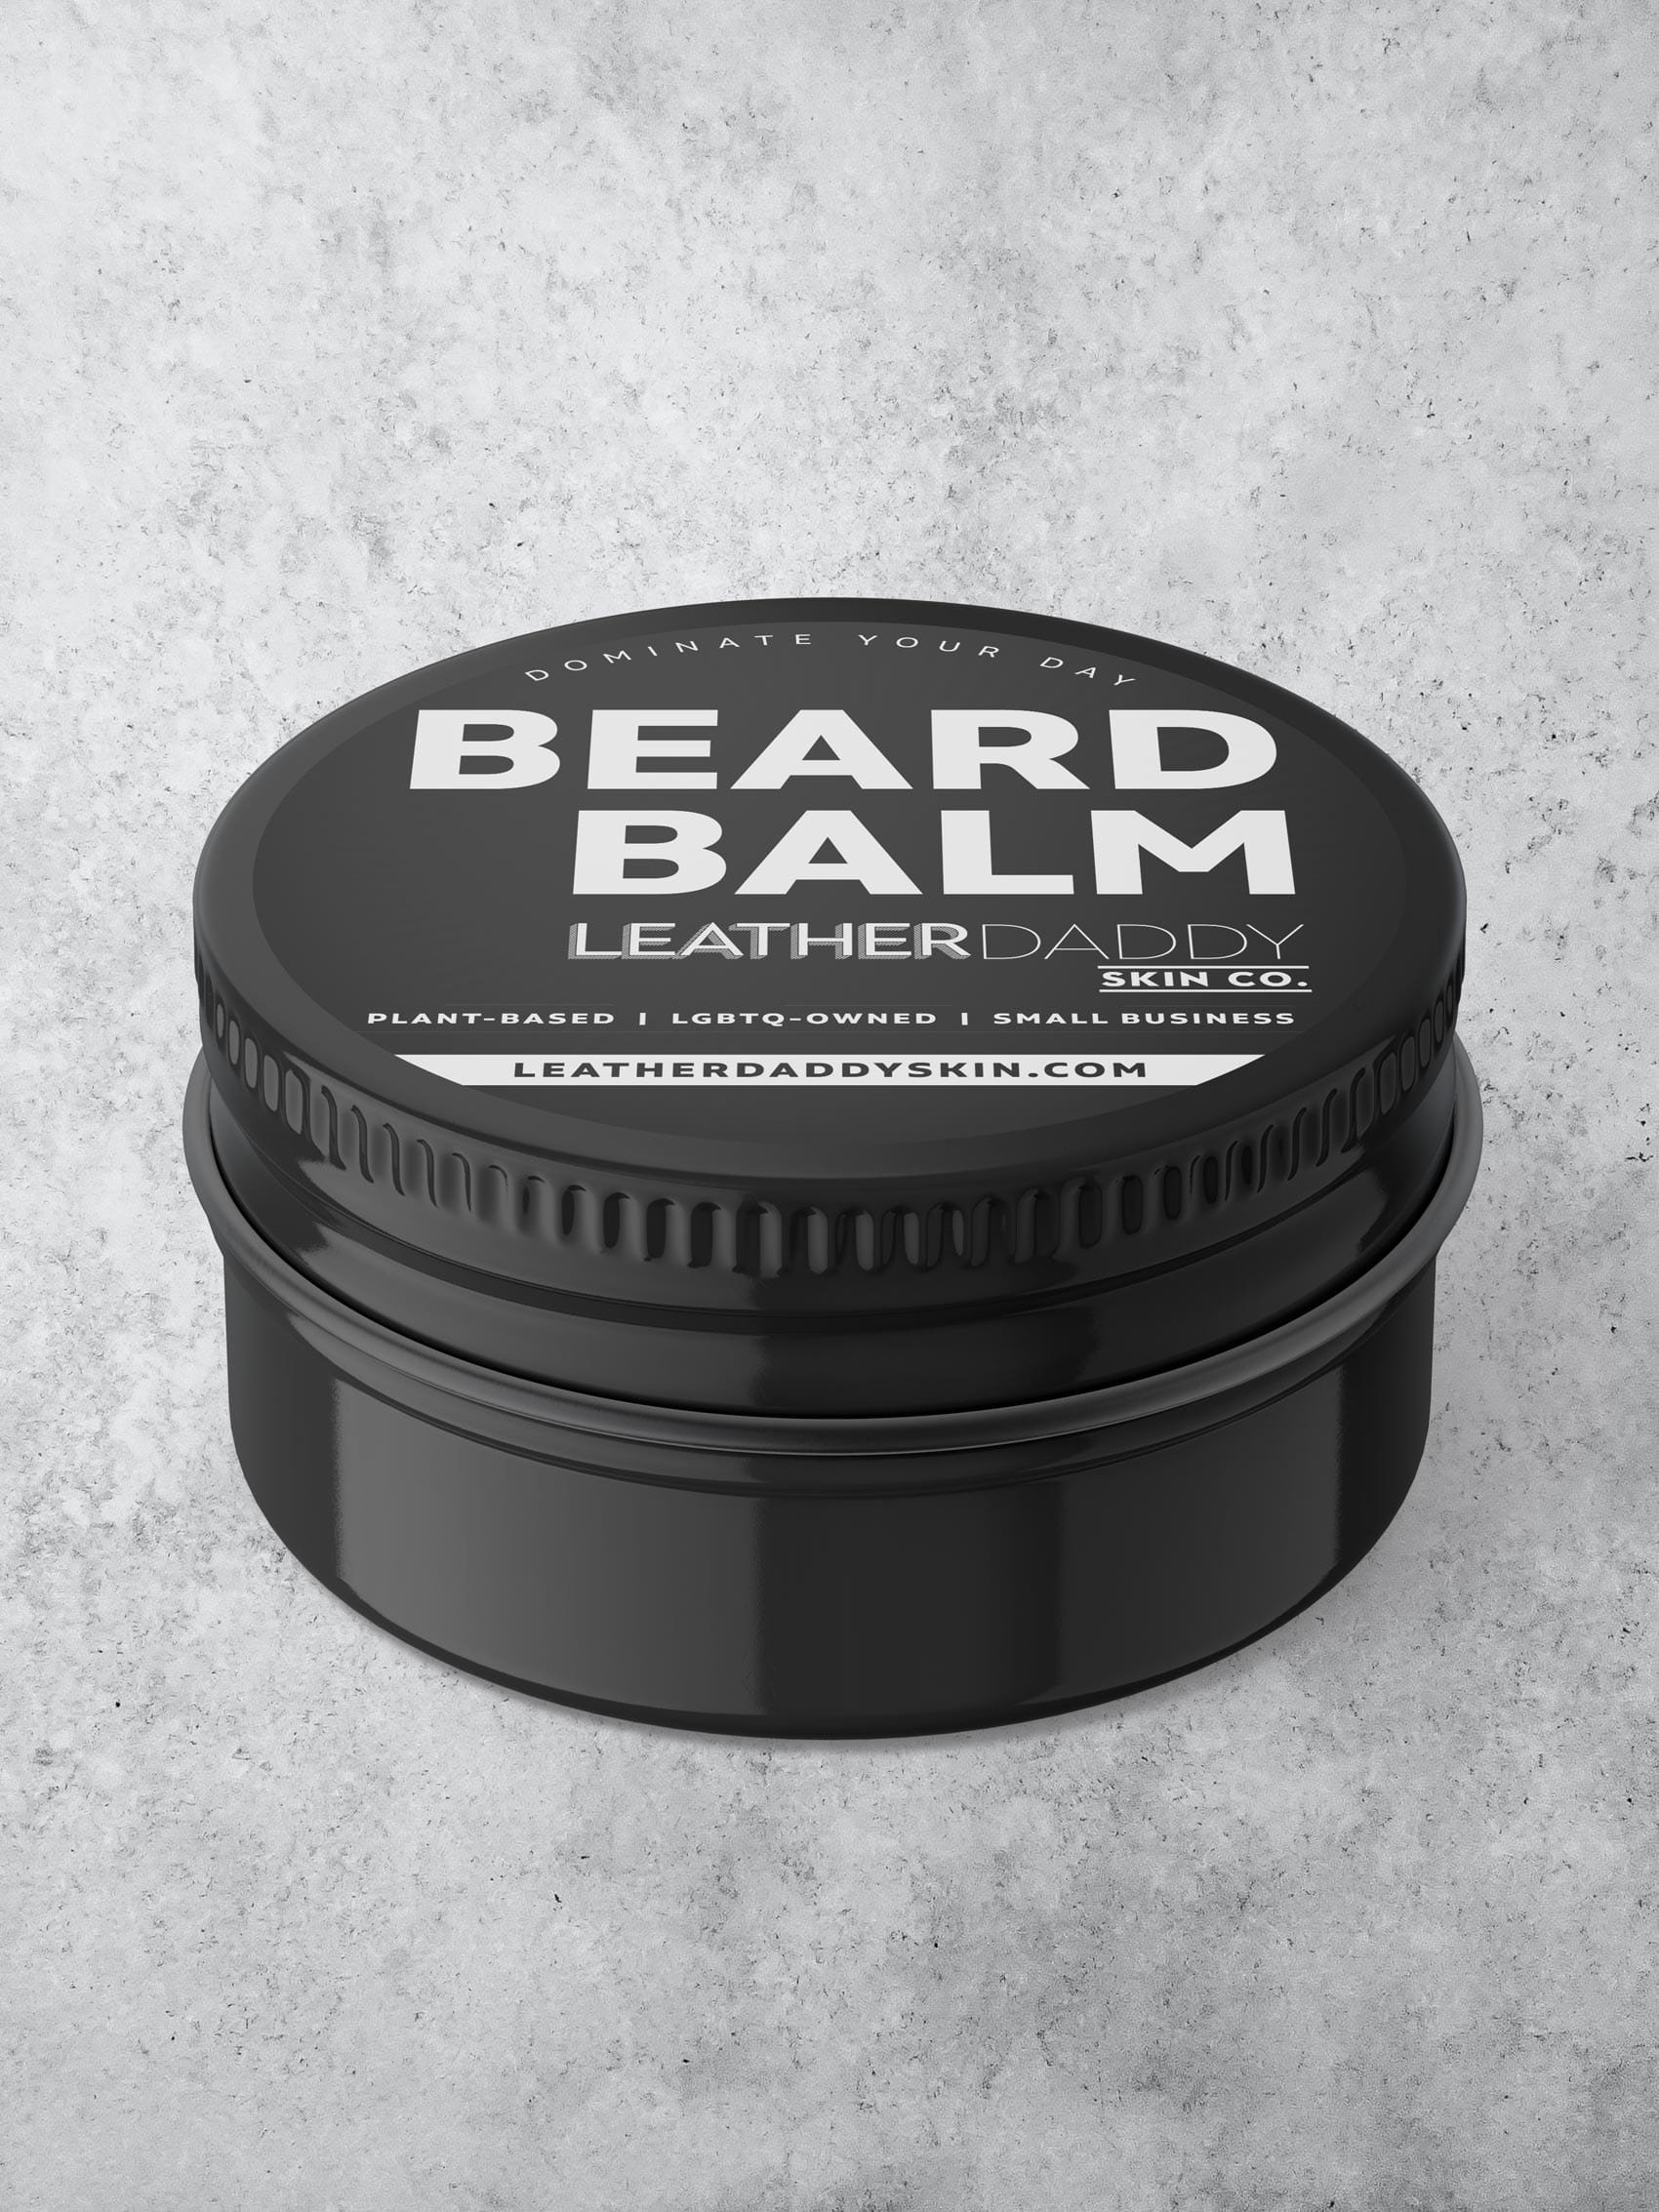 Skincare Beard Balm LEATHERDADDY BATOR